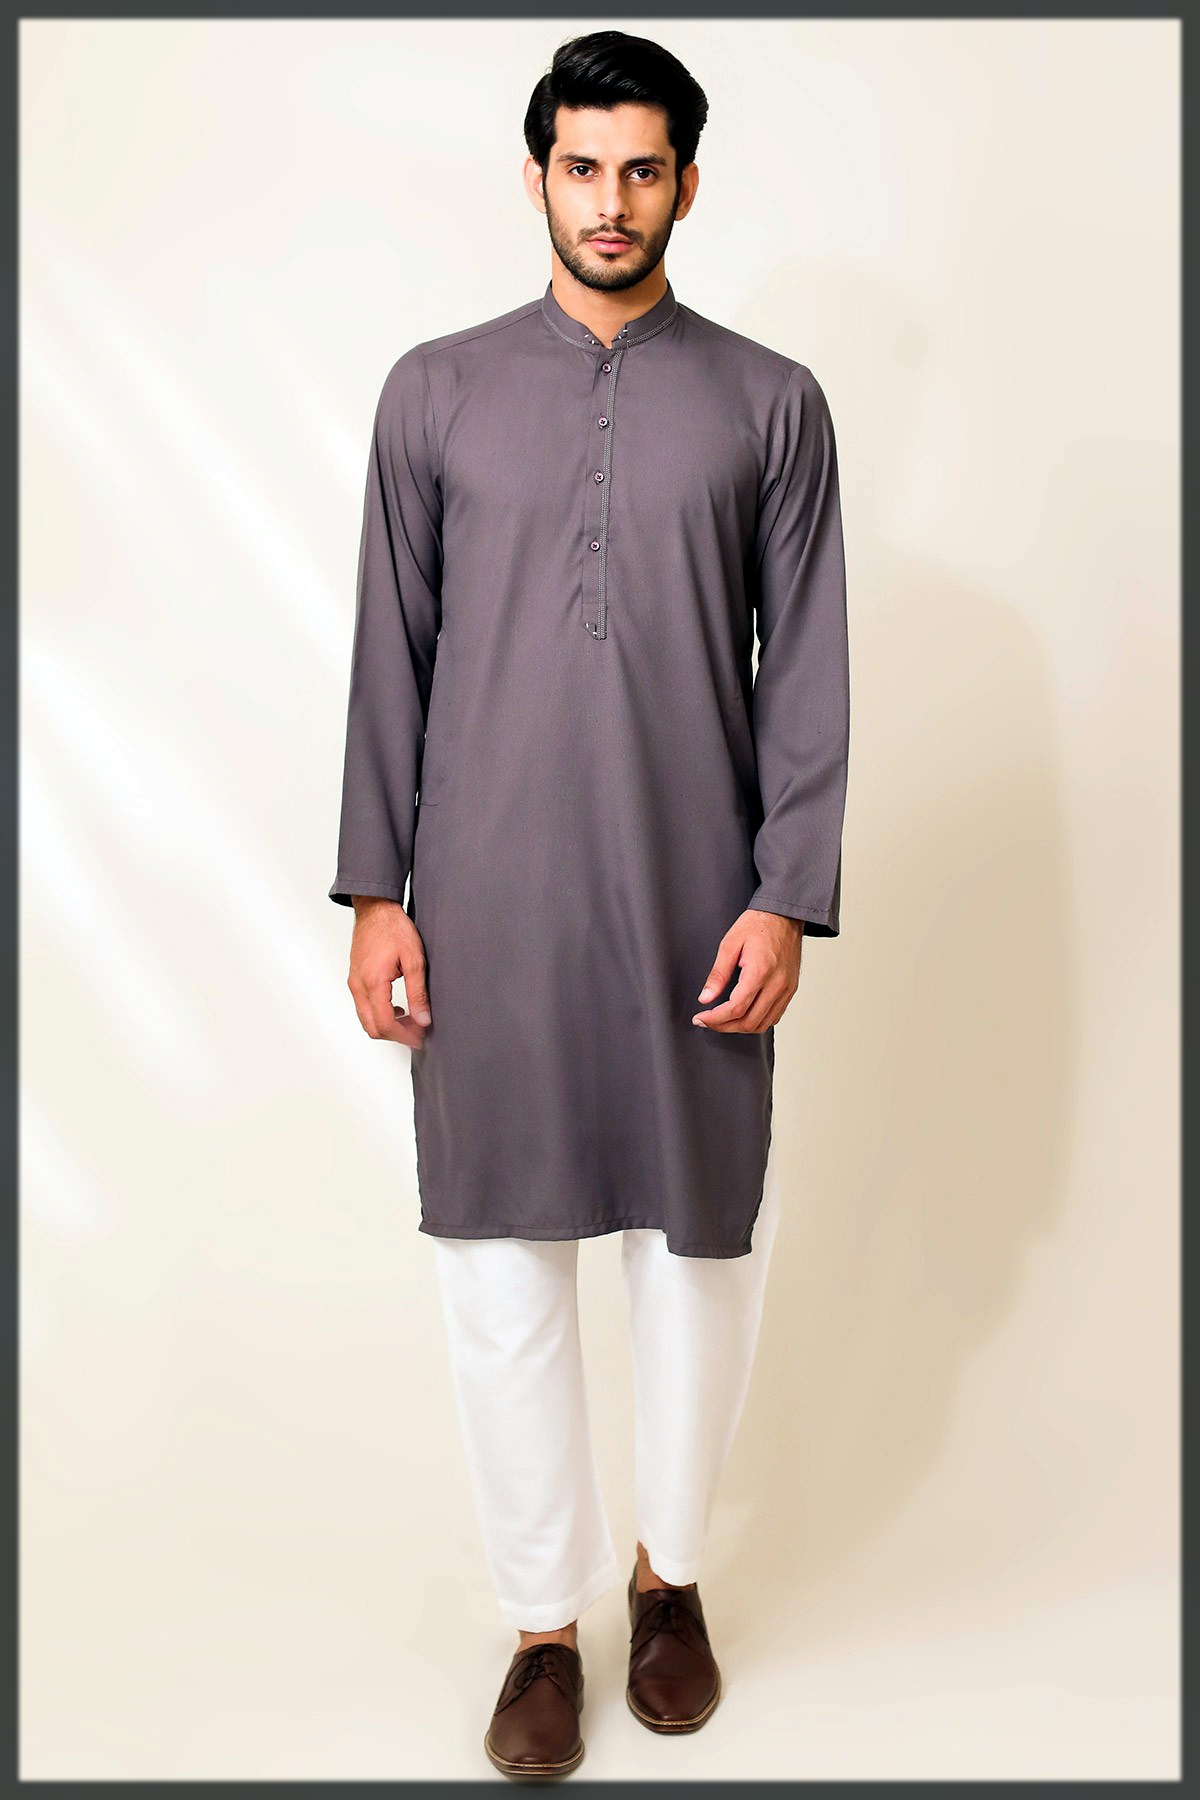 Pakistani Male Clothes | vlr.eng.br